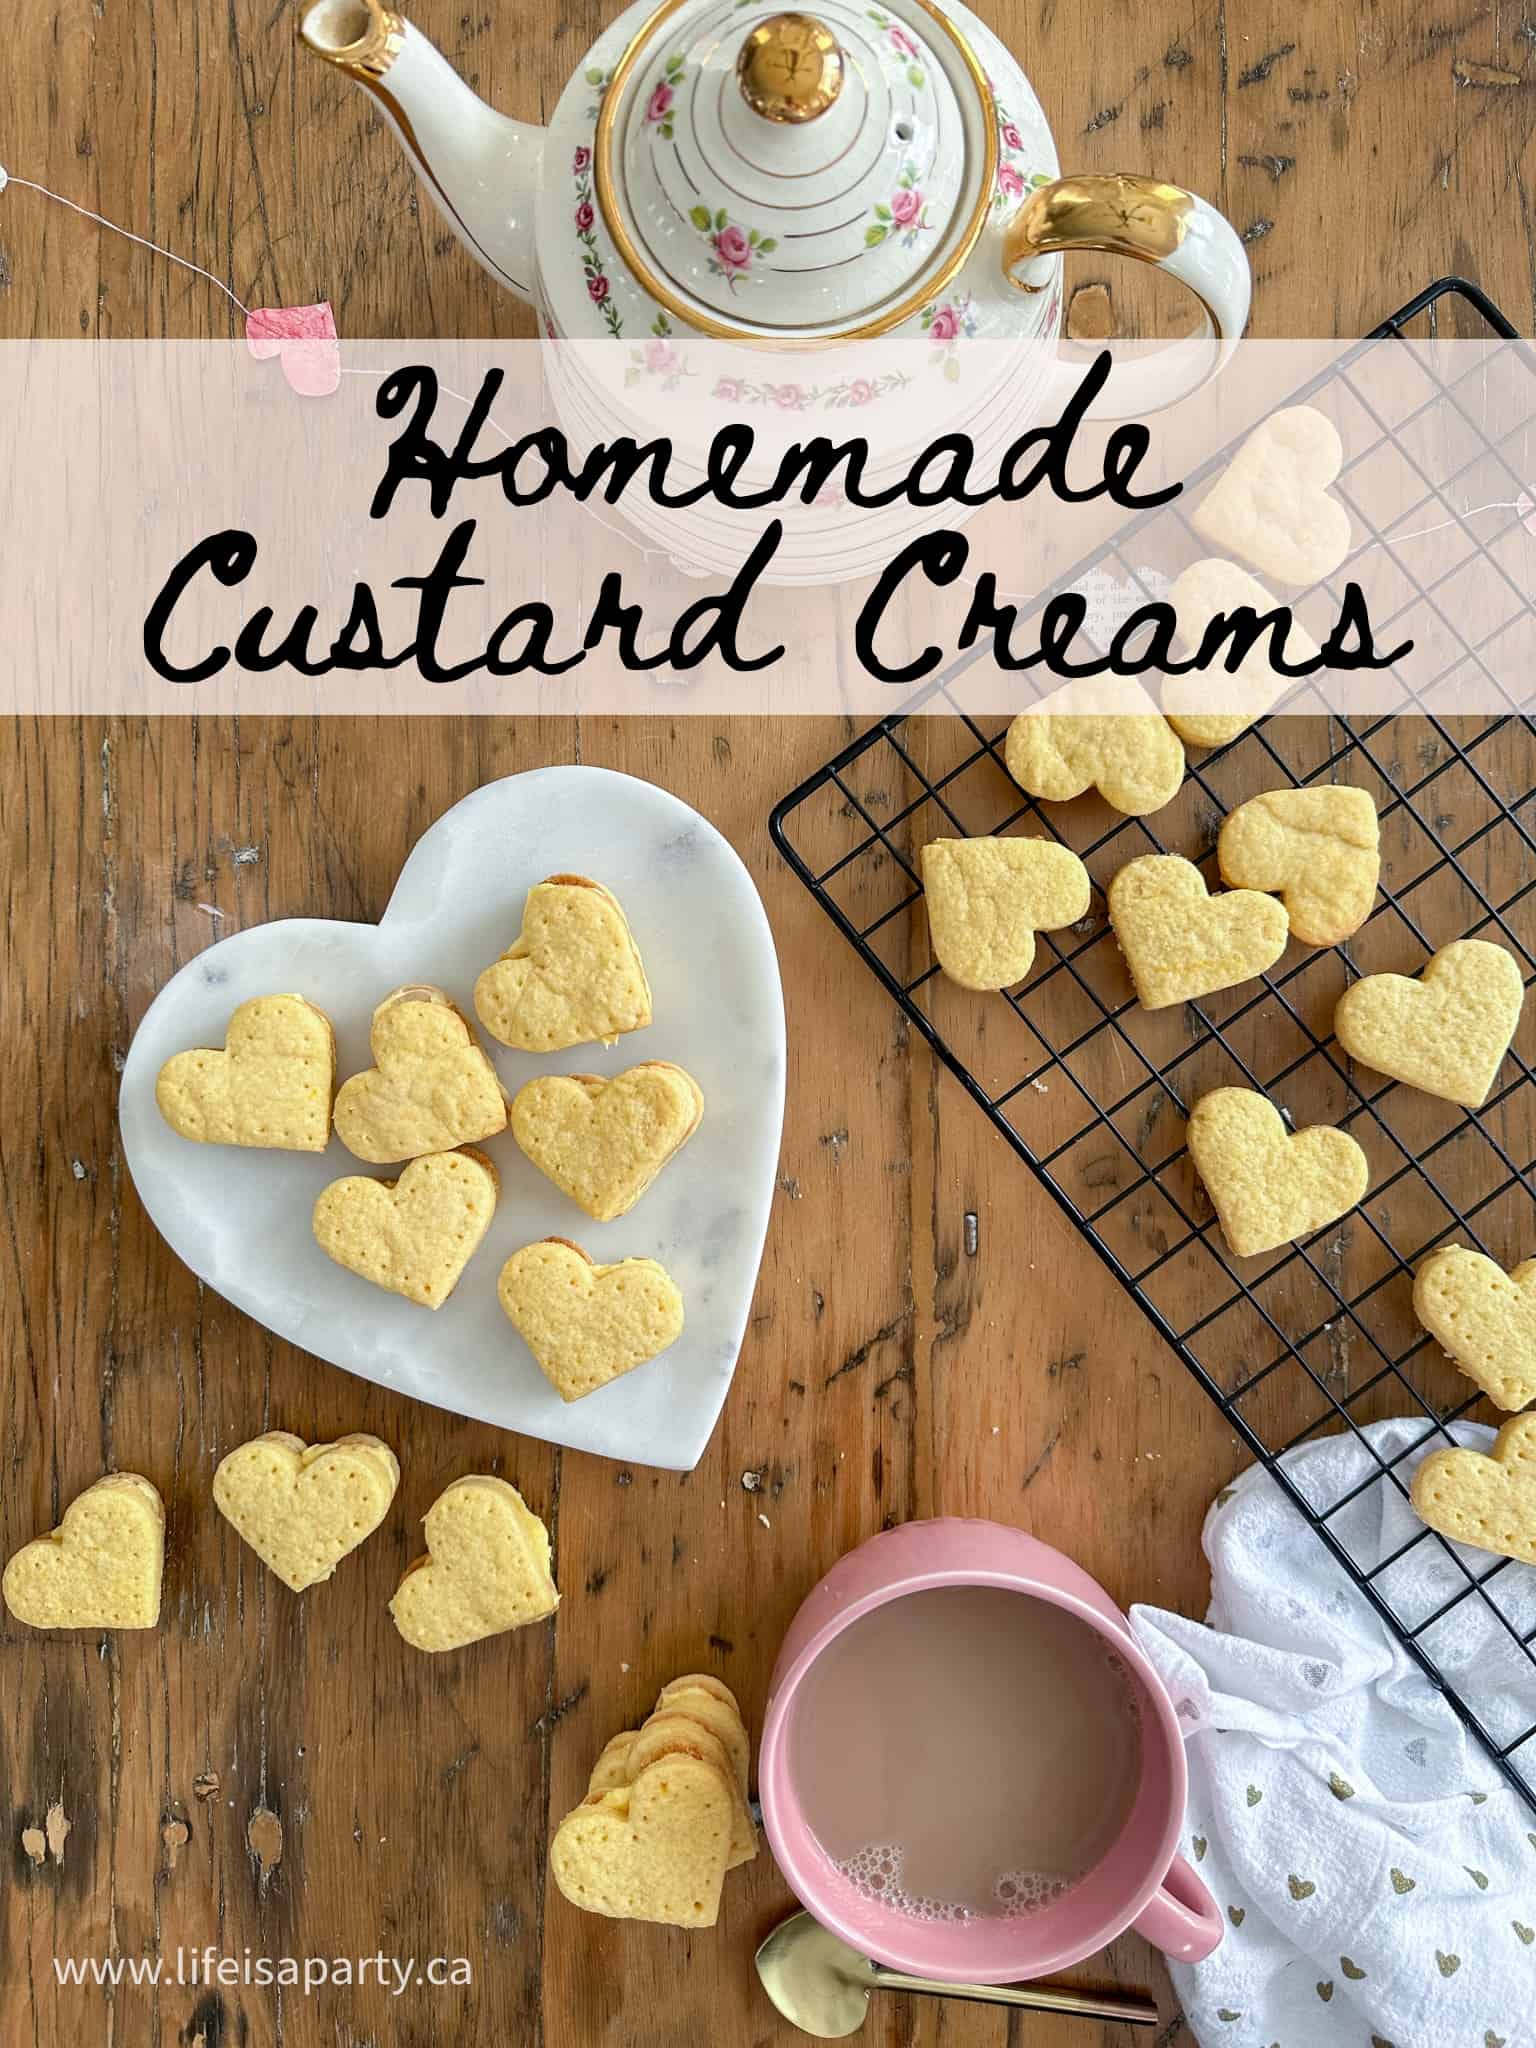 Homemade Custard Creams Recipe